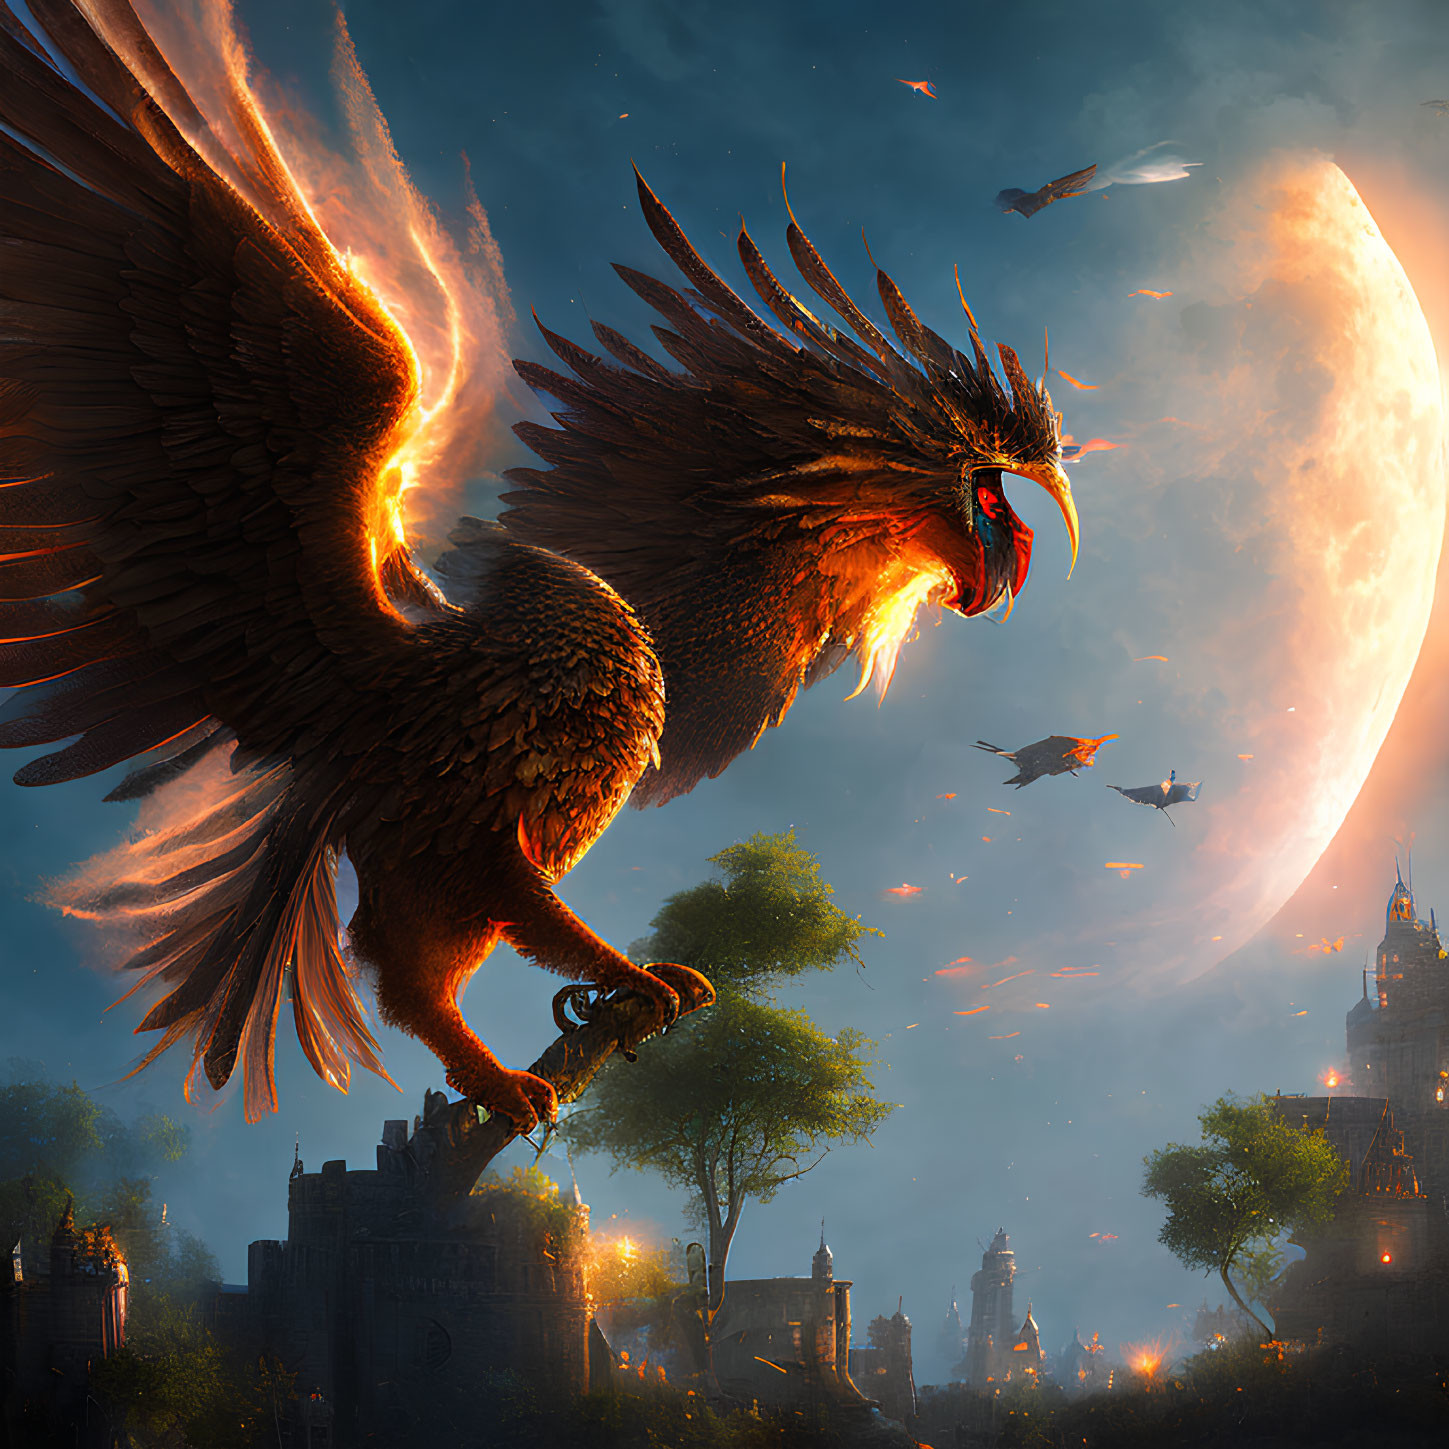 Majestic phoenix flying near castle under crescent moon